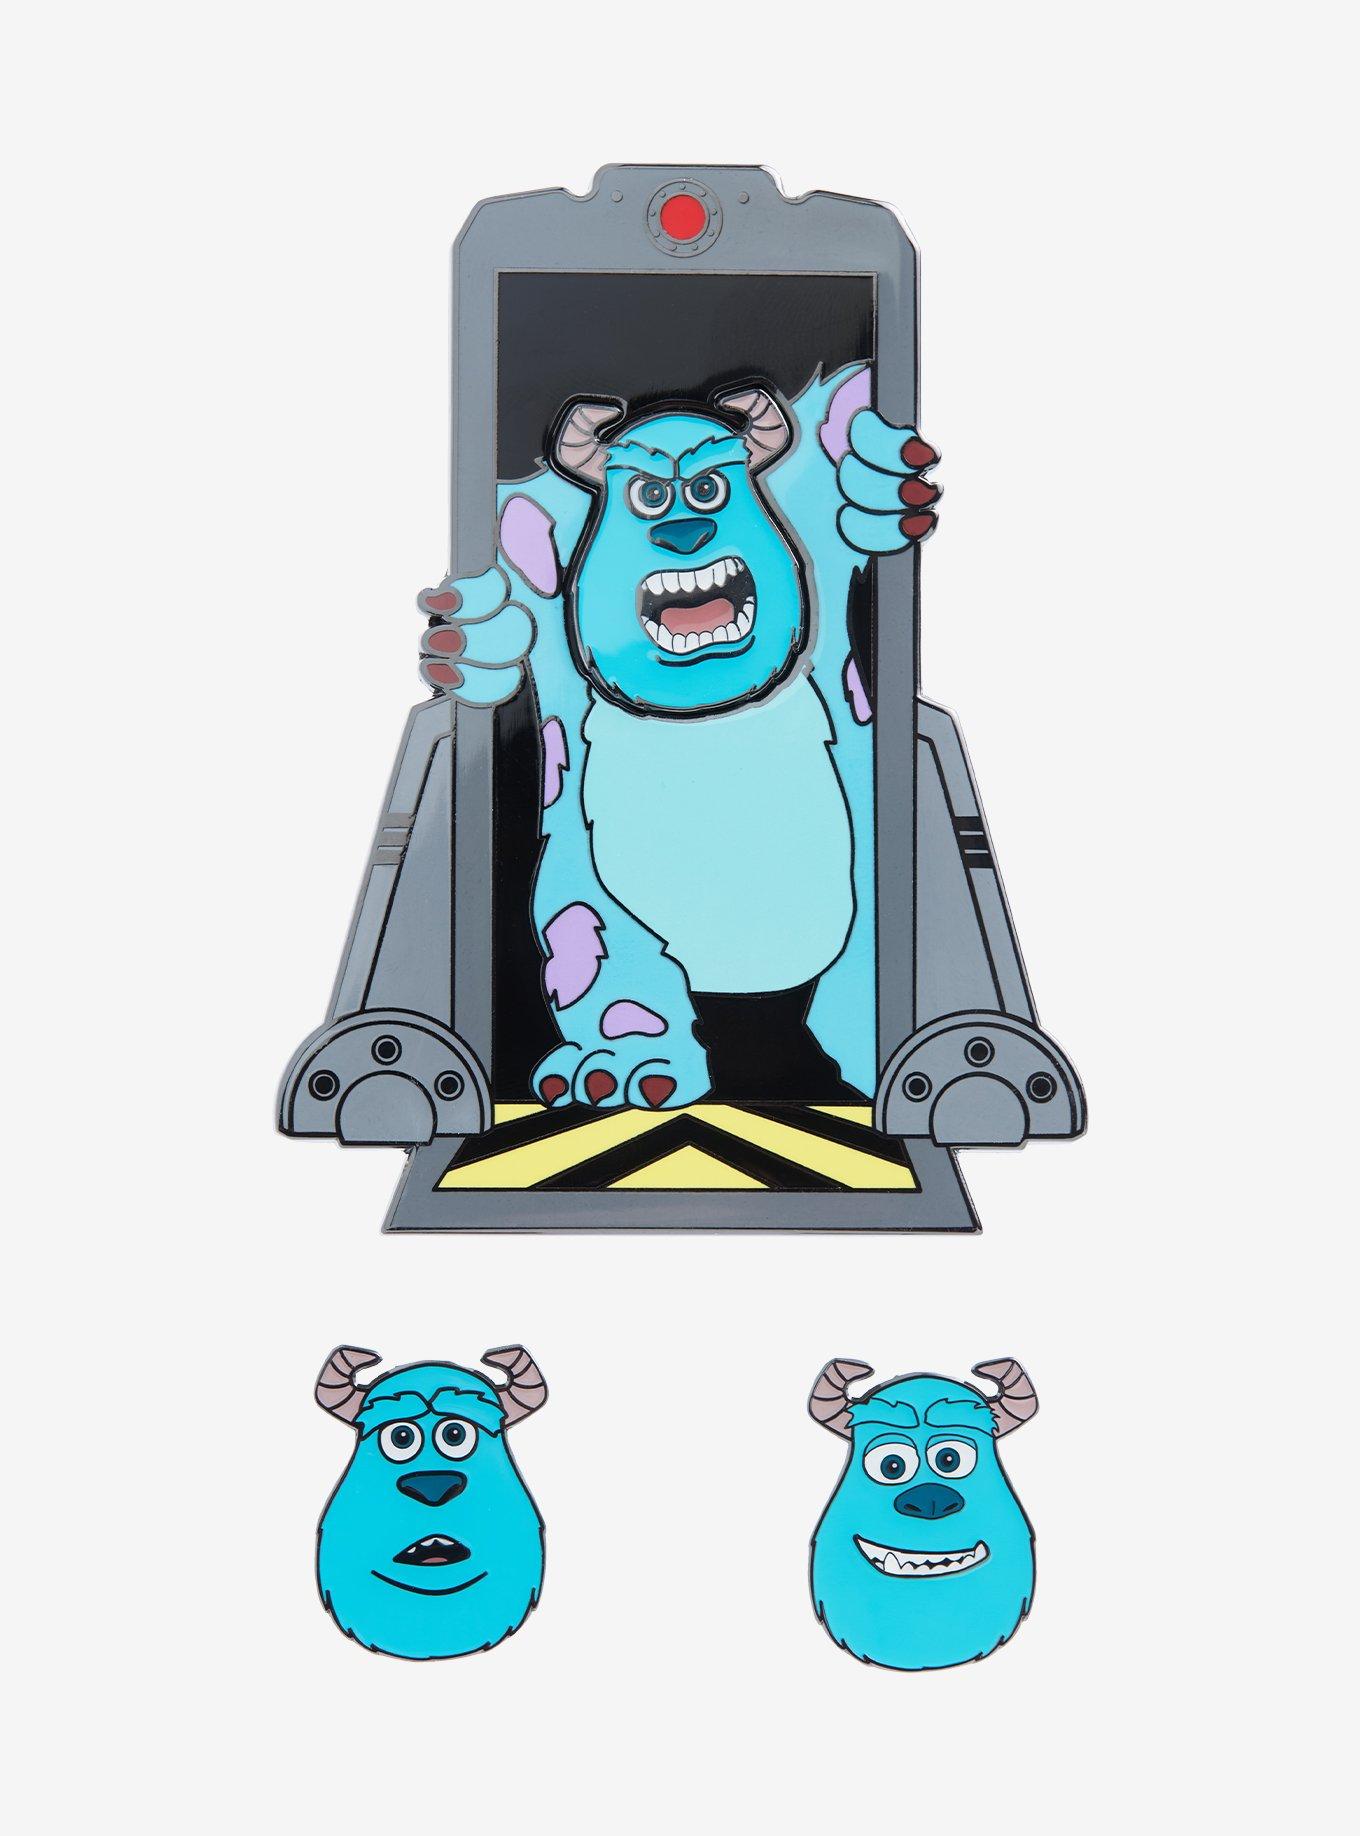 Disney Pixar Monsters Inc Bracelet Set